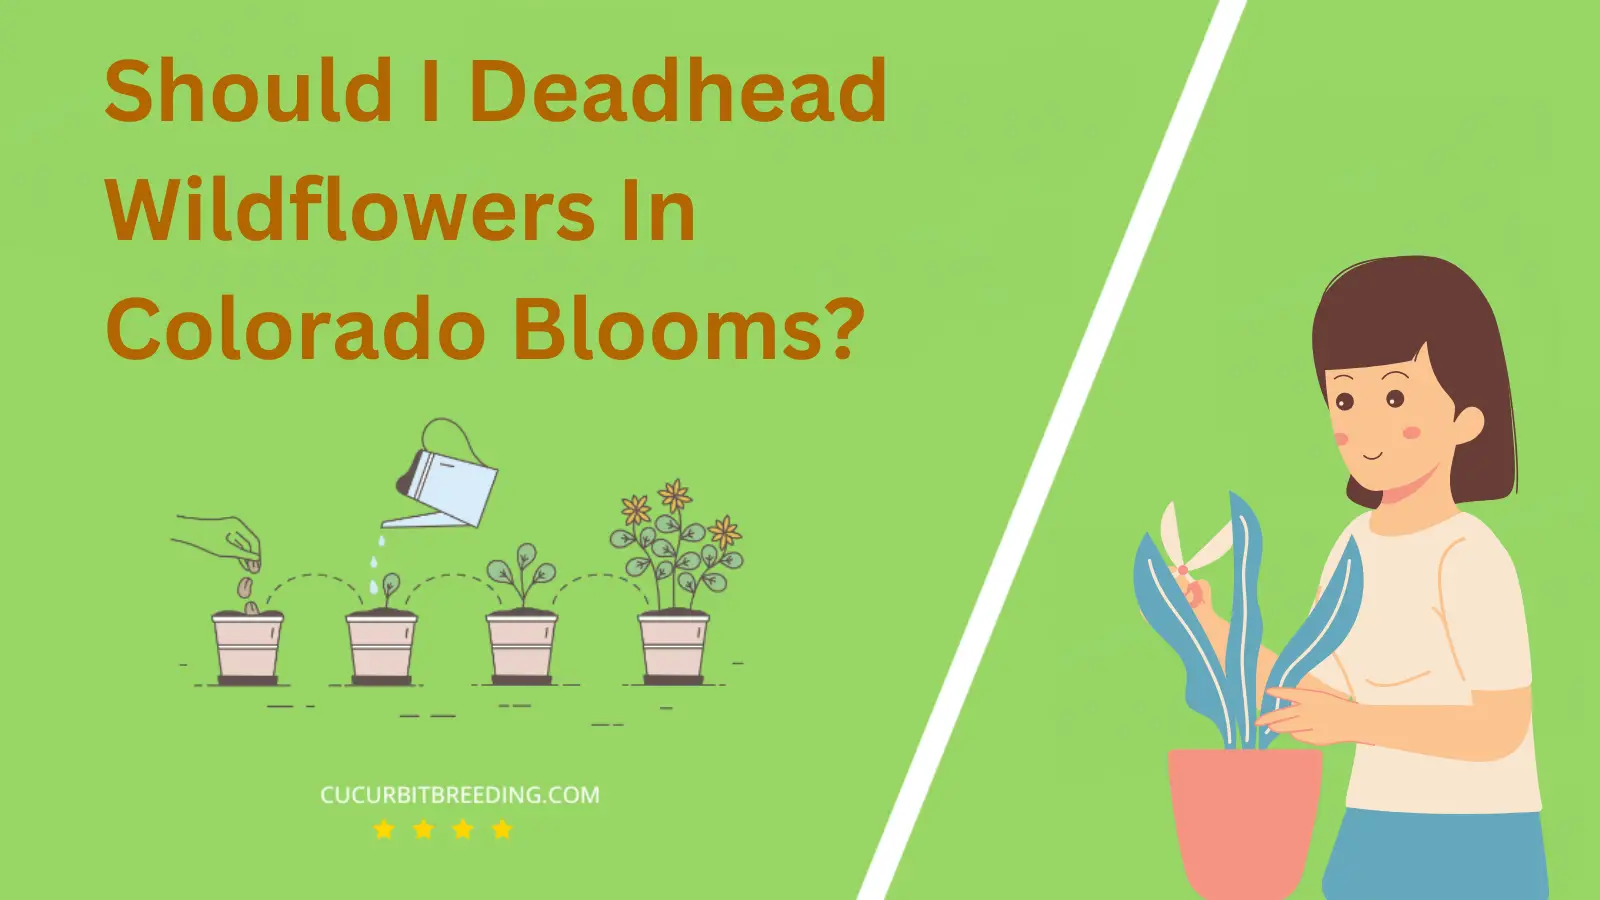 Should I Deadhead Wildflowers In Colorado Blooms?